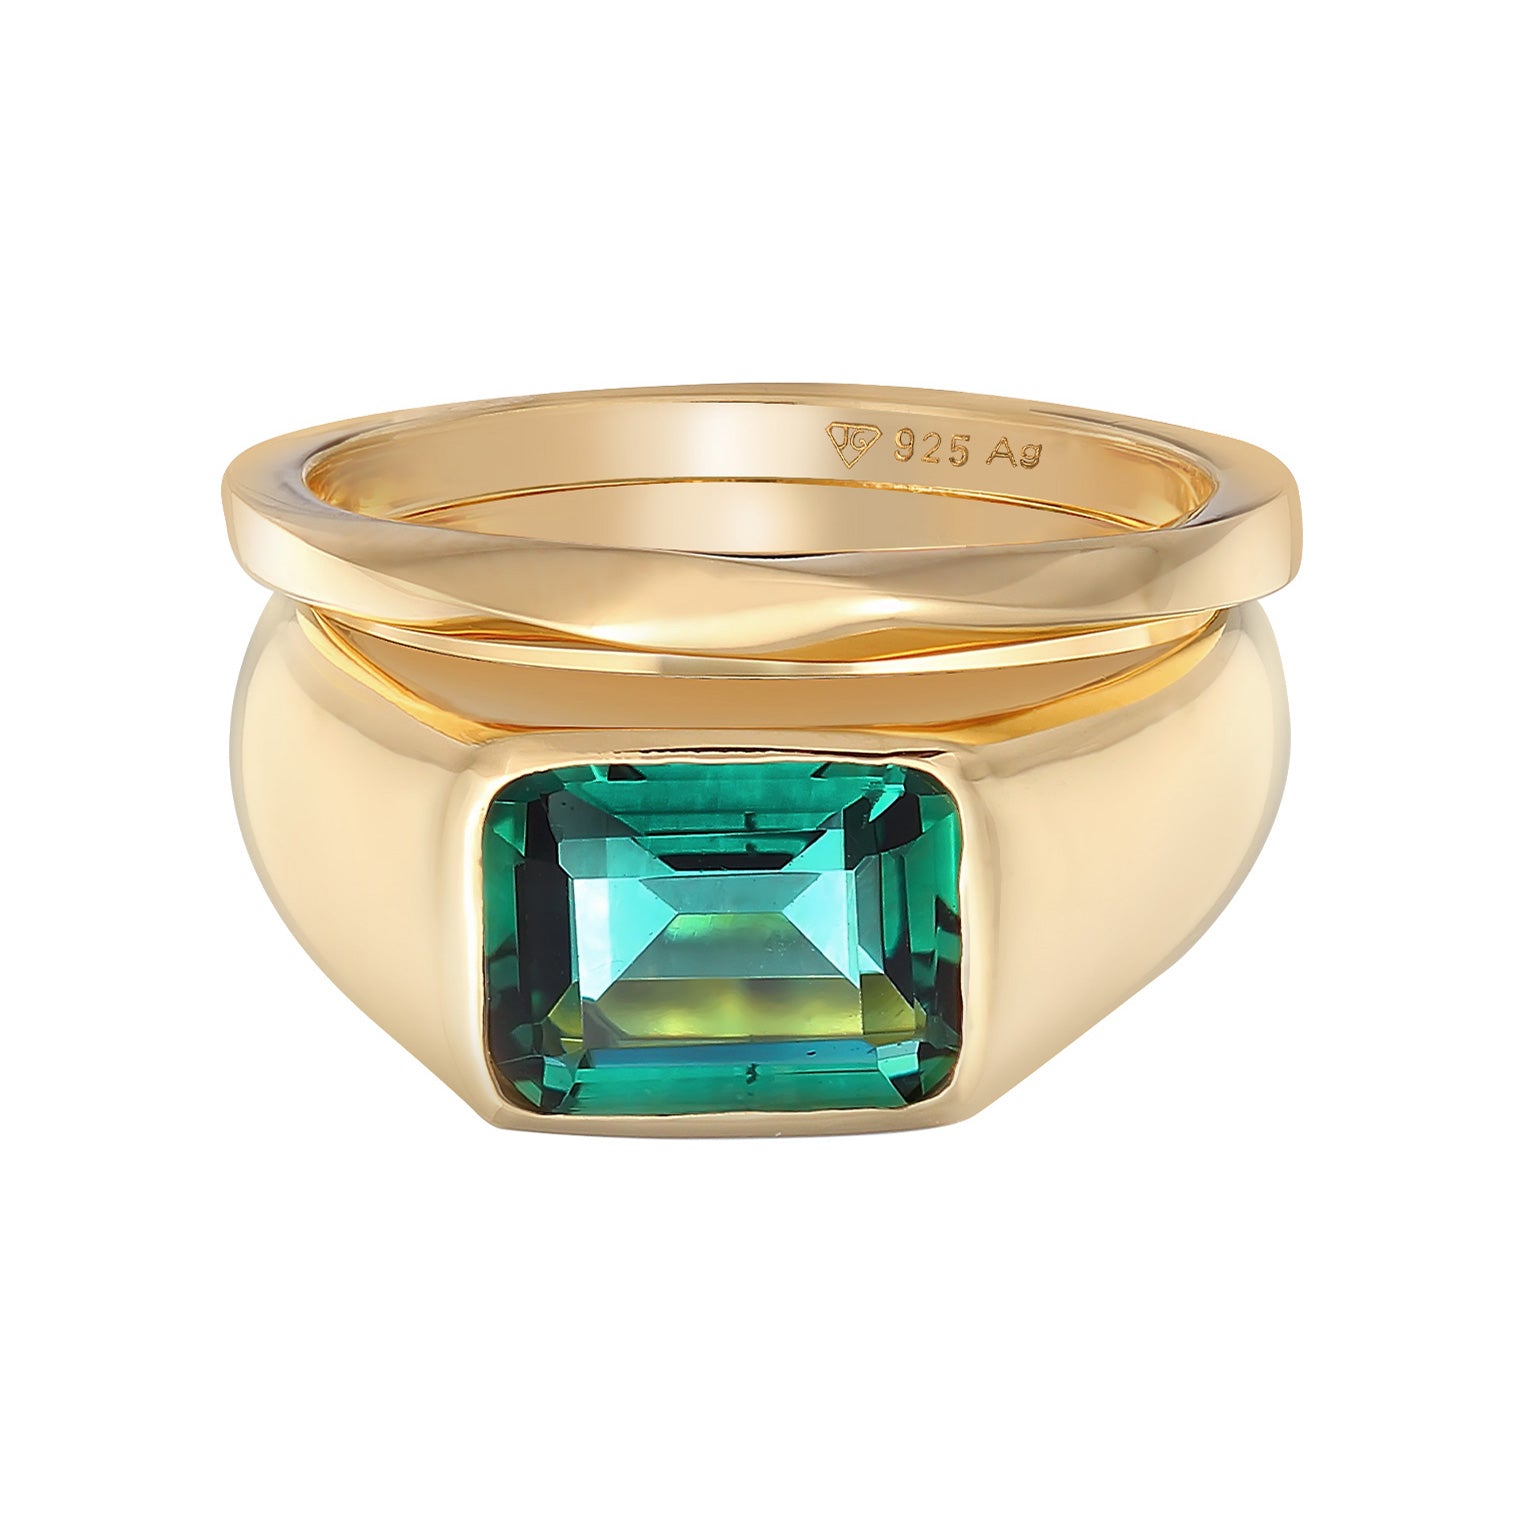 Signet ring quartz band ring set – Jewelry 925 Elli silver